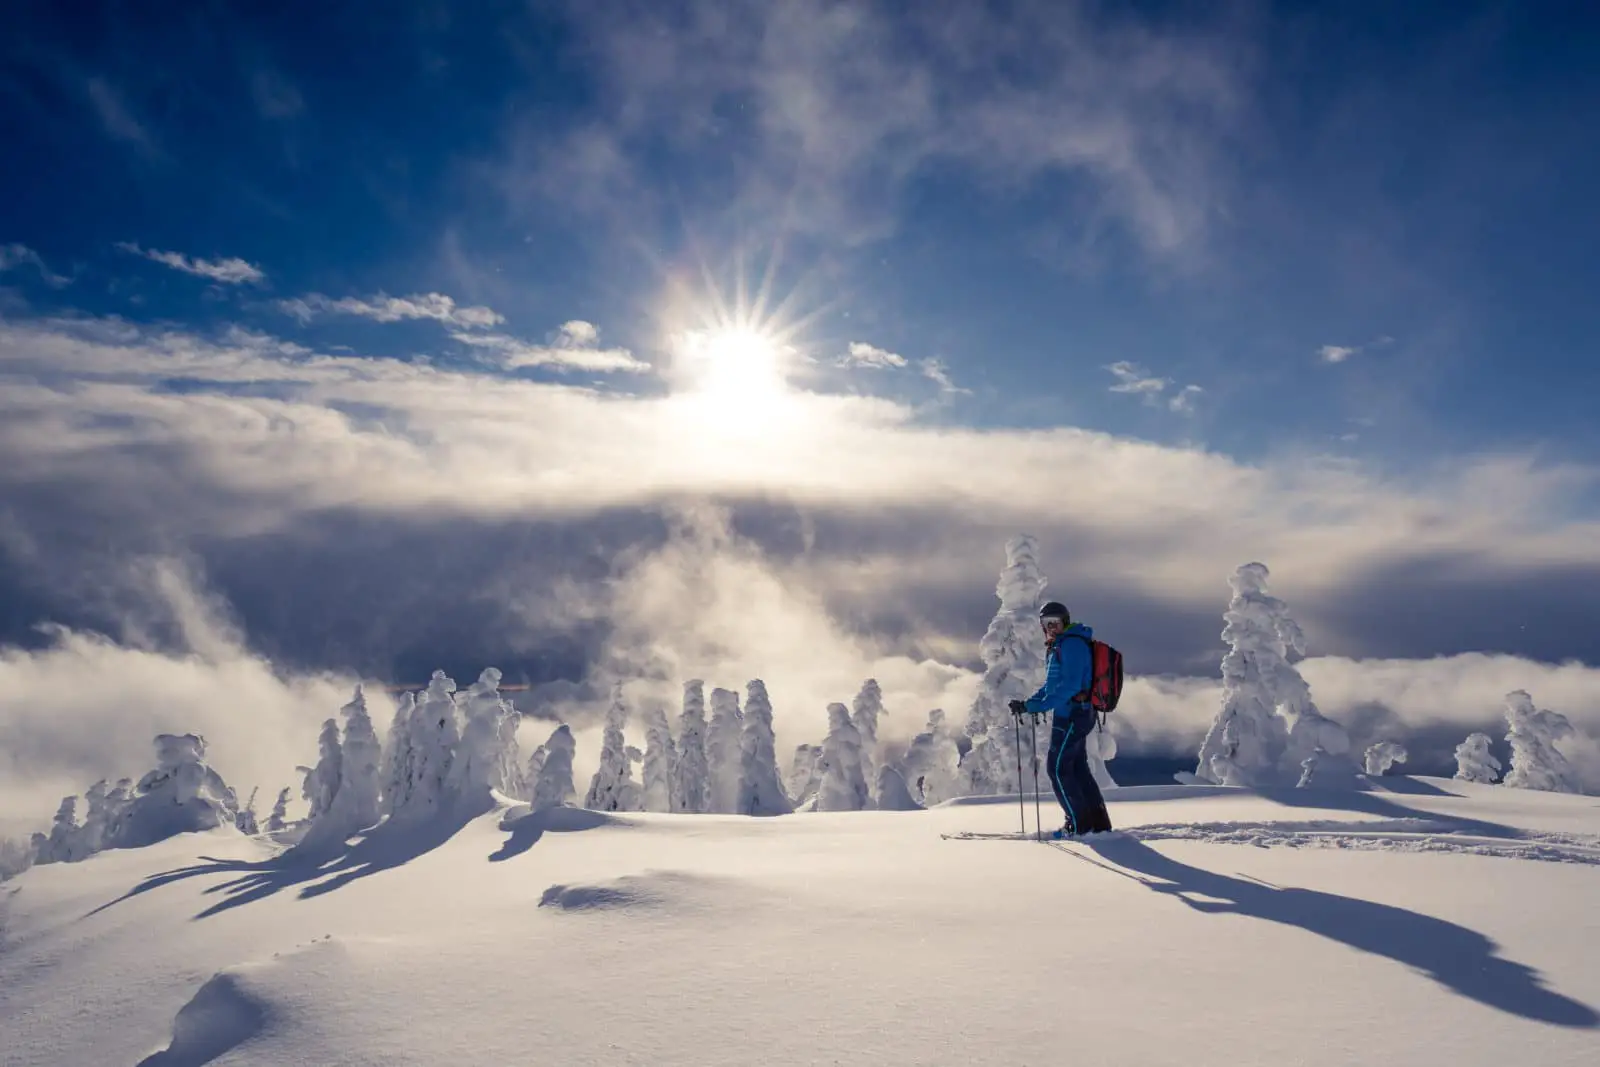 A skier in the mountains by Kelowna - Photo: Geoff Holman / Big White Ski Resort